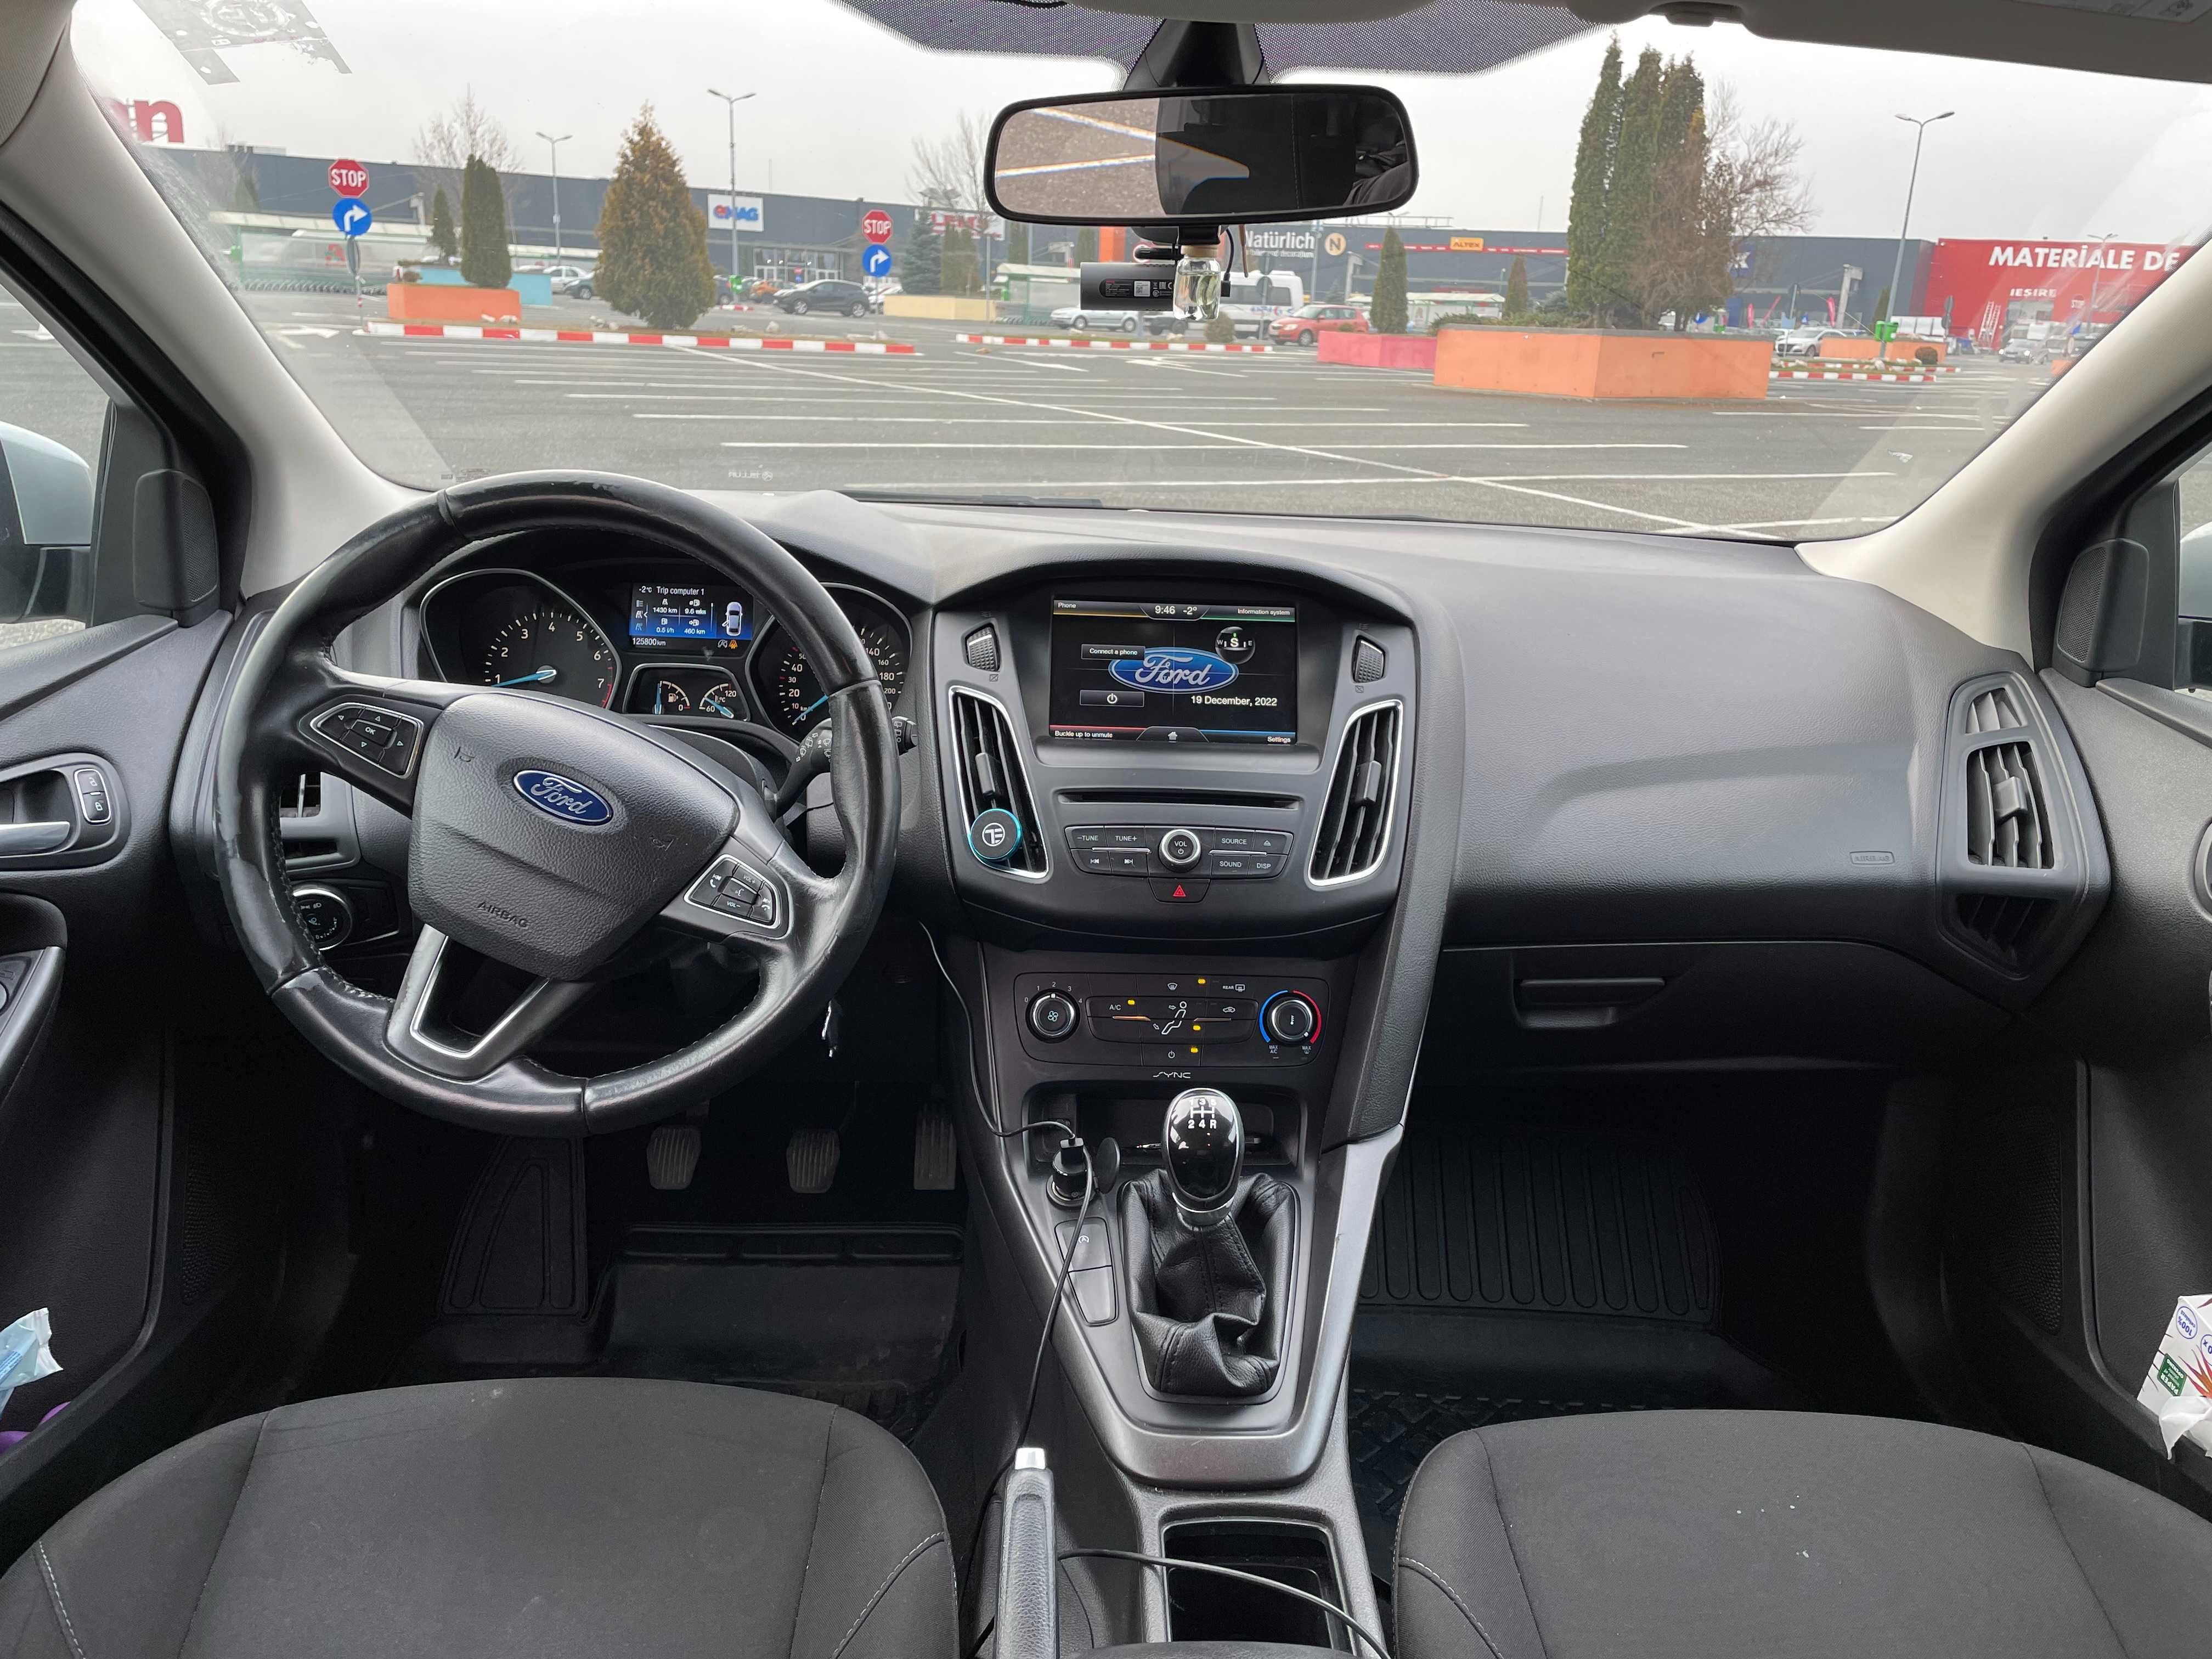 Ford Focus 2015 1.0 Benzina, EcoBoost  126.000 km, Factura, TVA